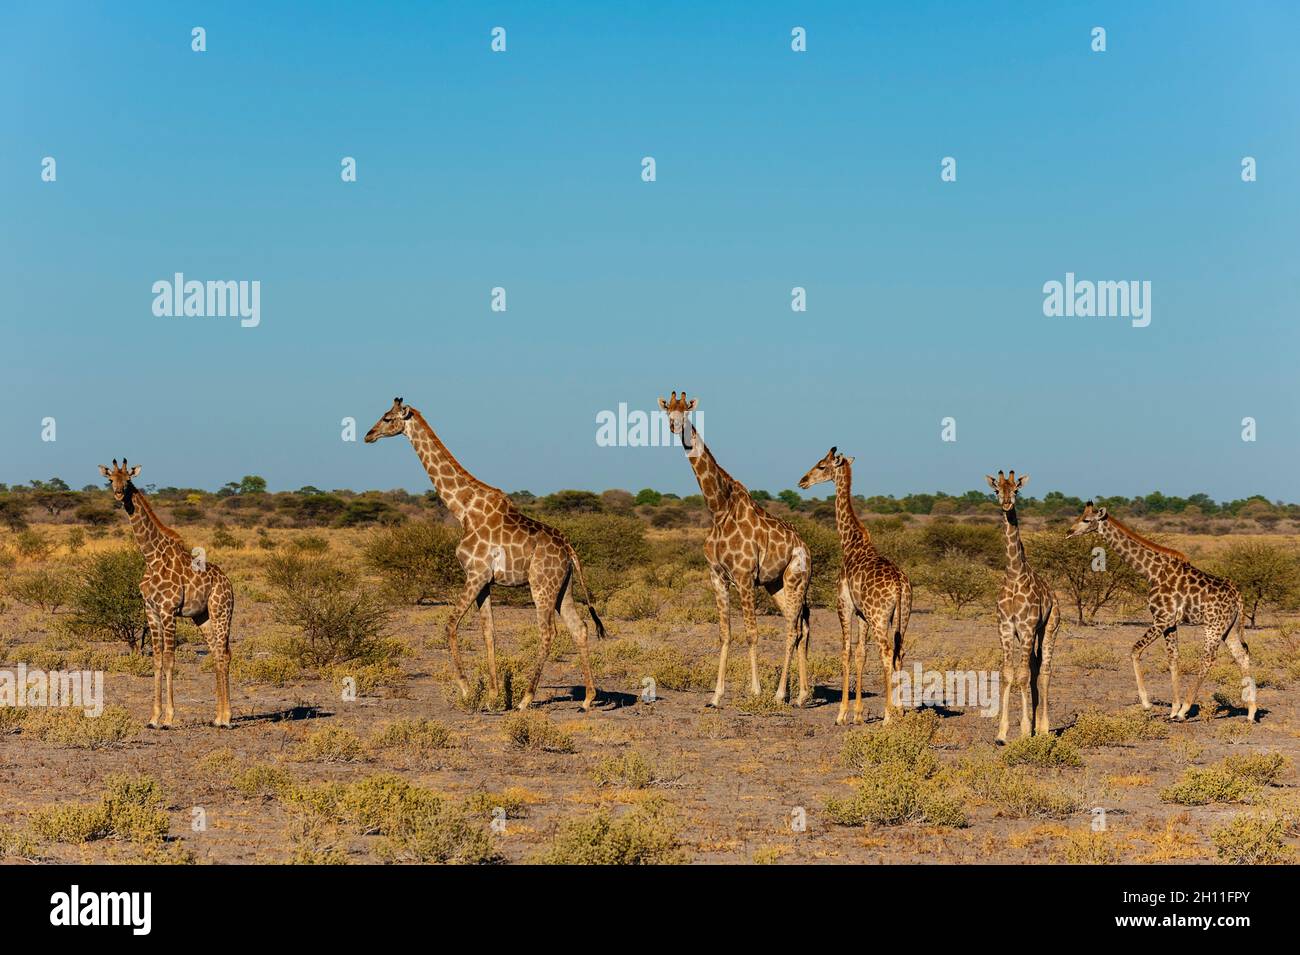 A herd of southern giraffes, Giraffa camelopardalis, in an arid landscape. Central Kalahari Game Reserve, Botswana. Stock Photo